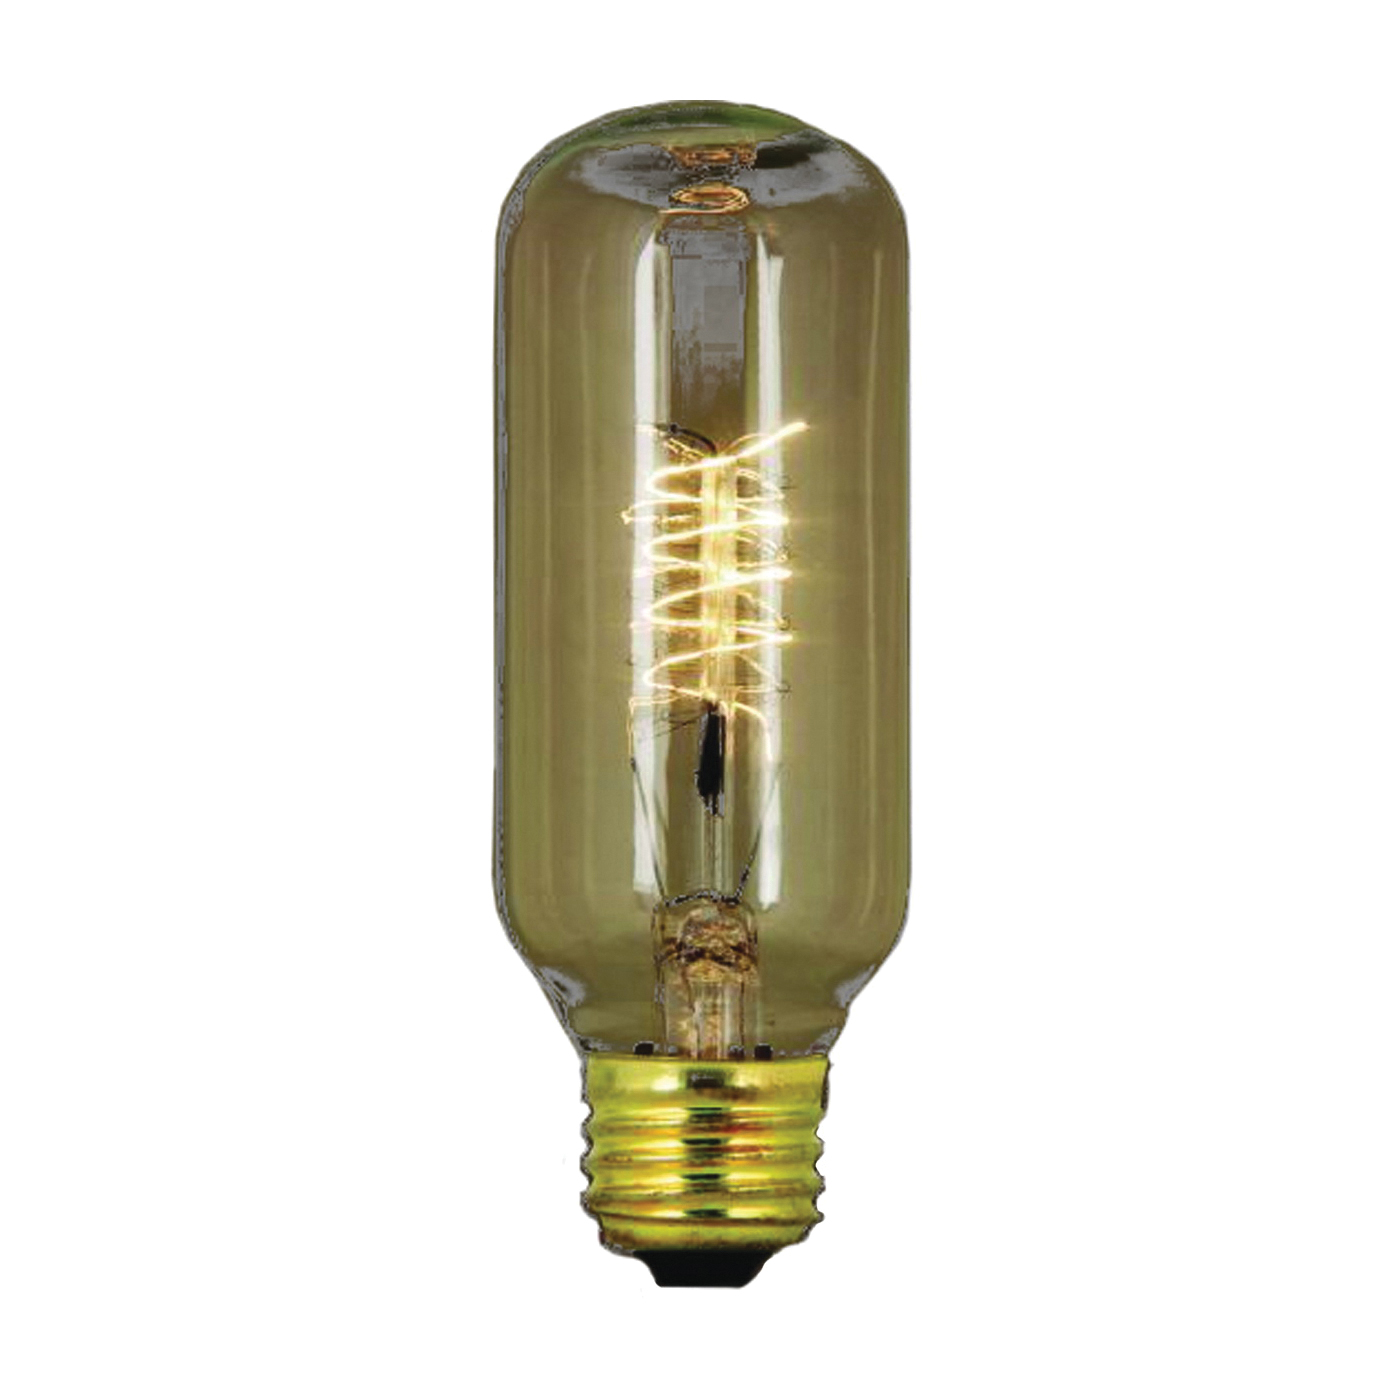 BP40T14/RP Incandescent Bulb, 40 W, T14 Lamp, Medium E26 Lamp Base, 75 Lumens, 2200 K Color Temp